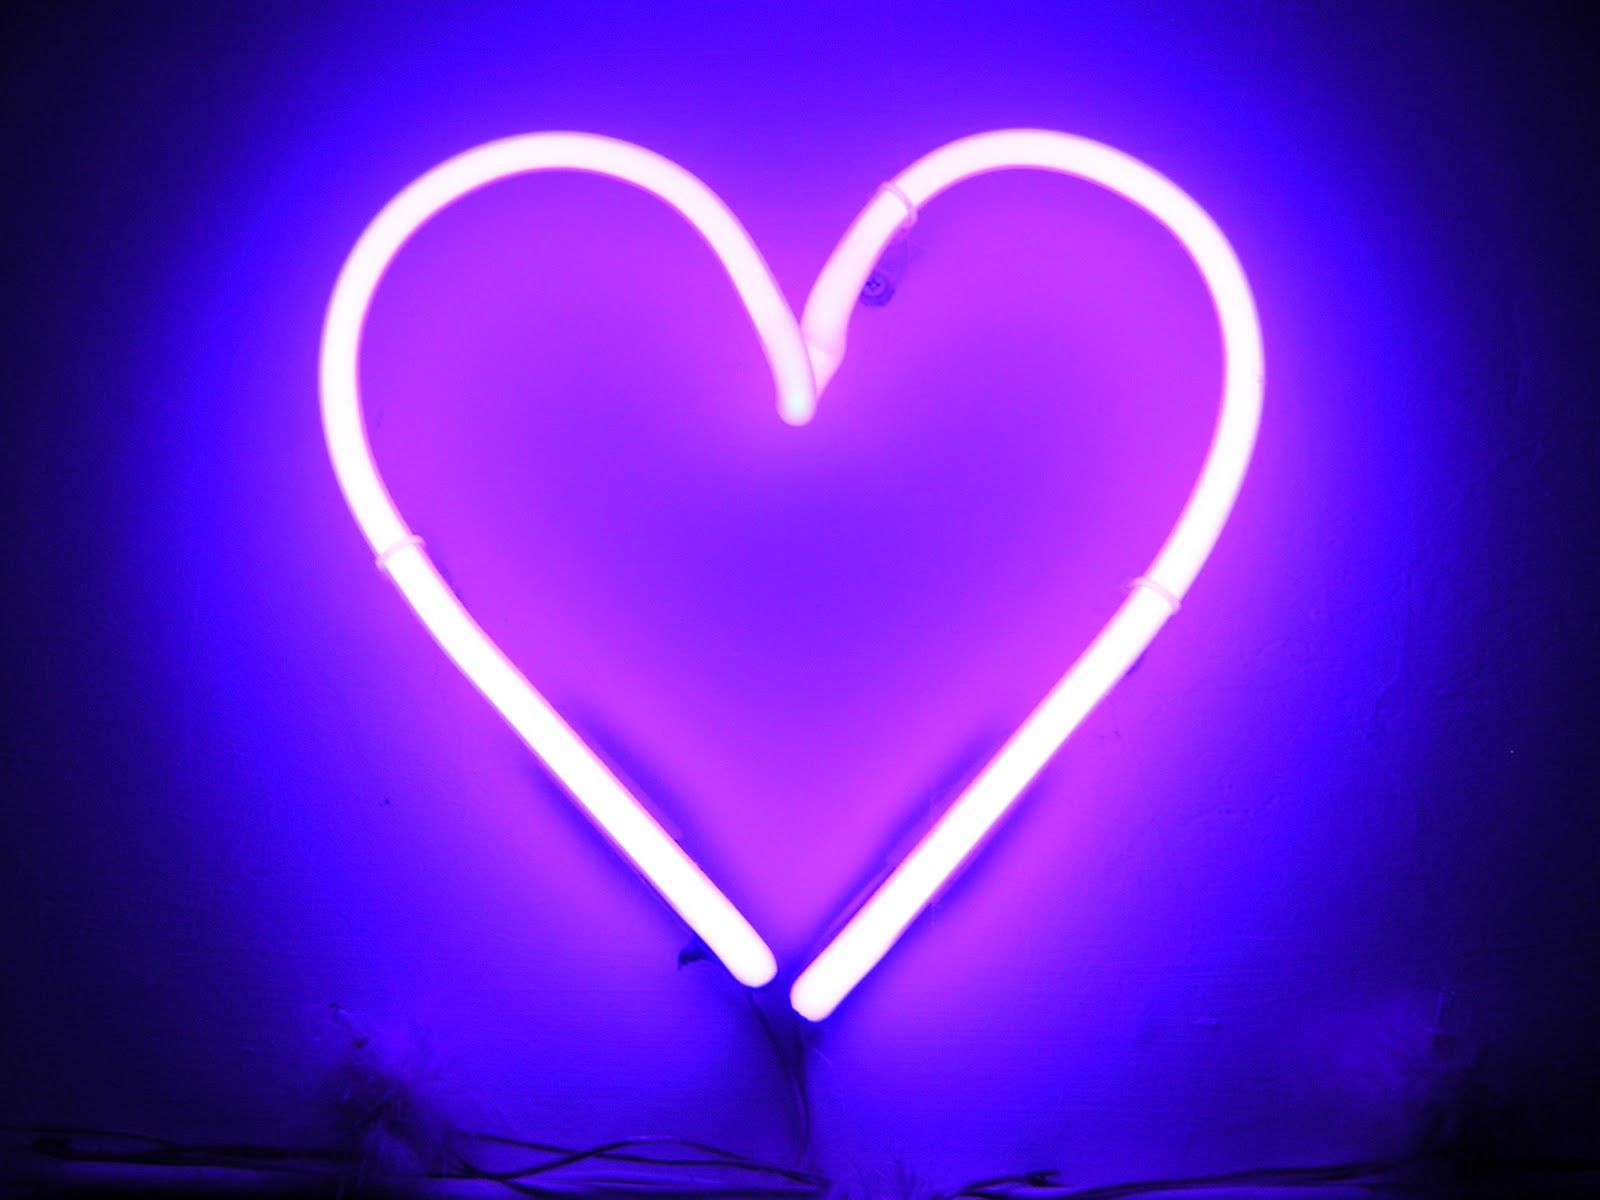 16800 Neon Heart Stock Photos Pictures  RoyaltyFree Images  iStock   Heart Neon Neon love